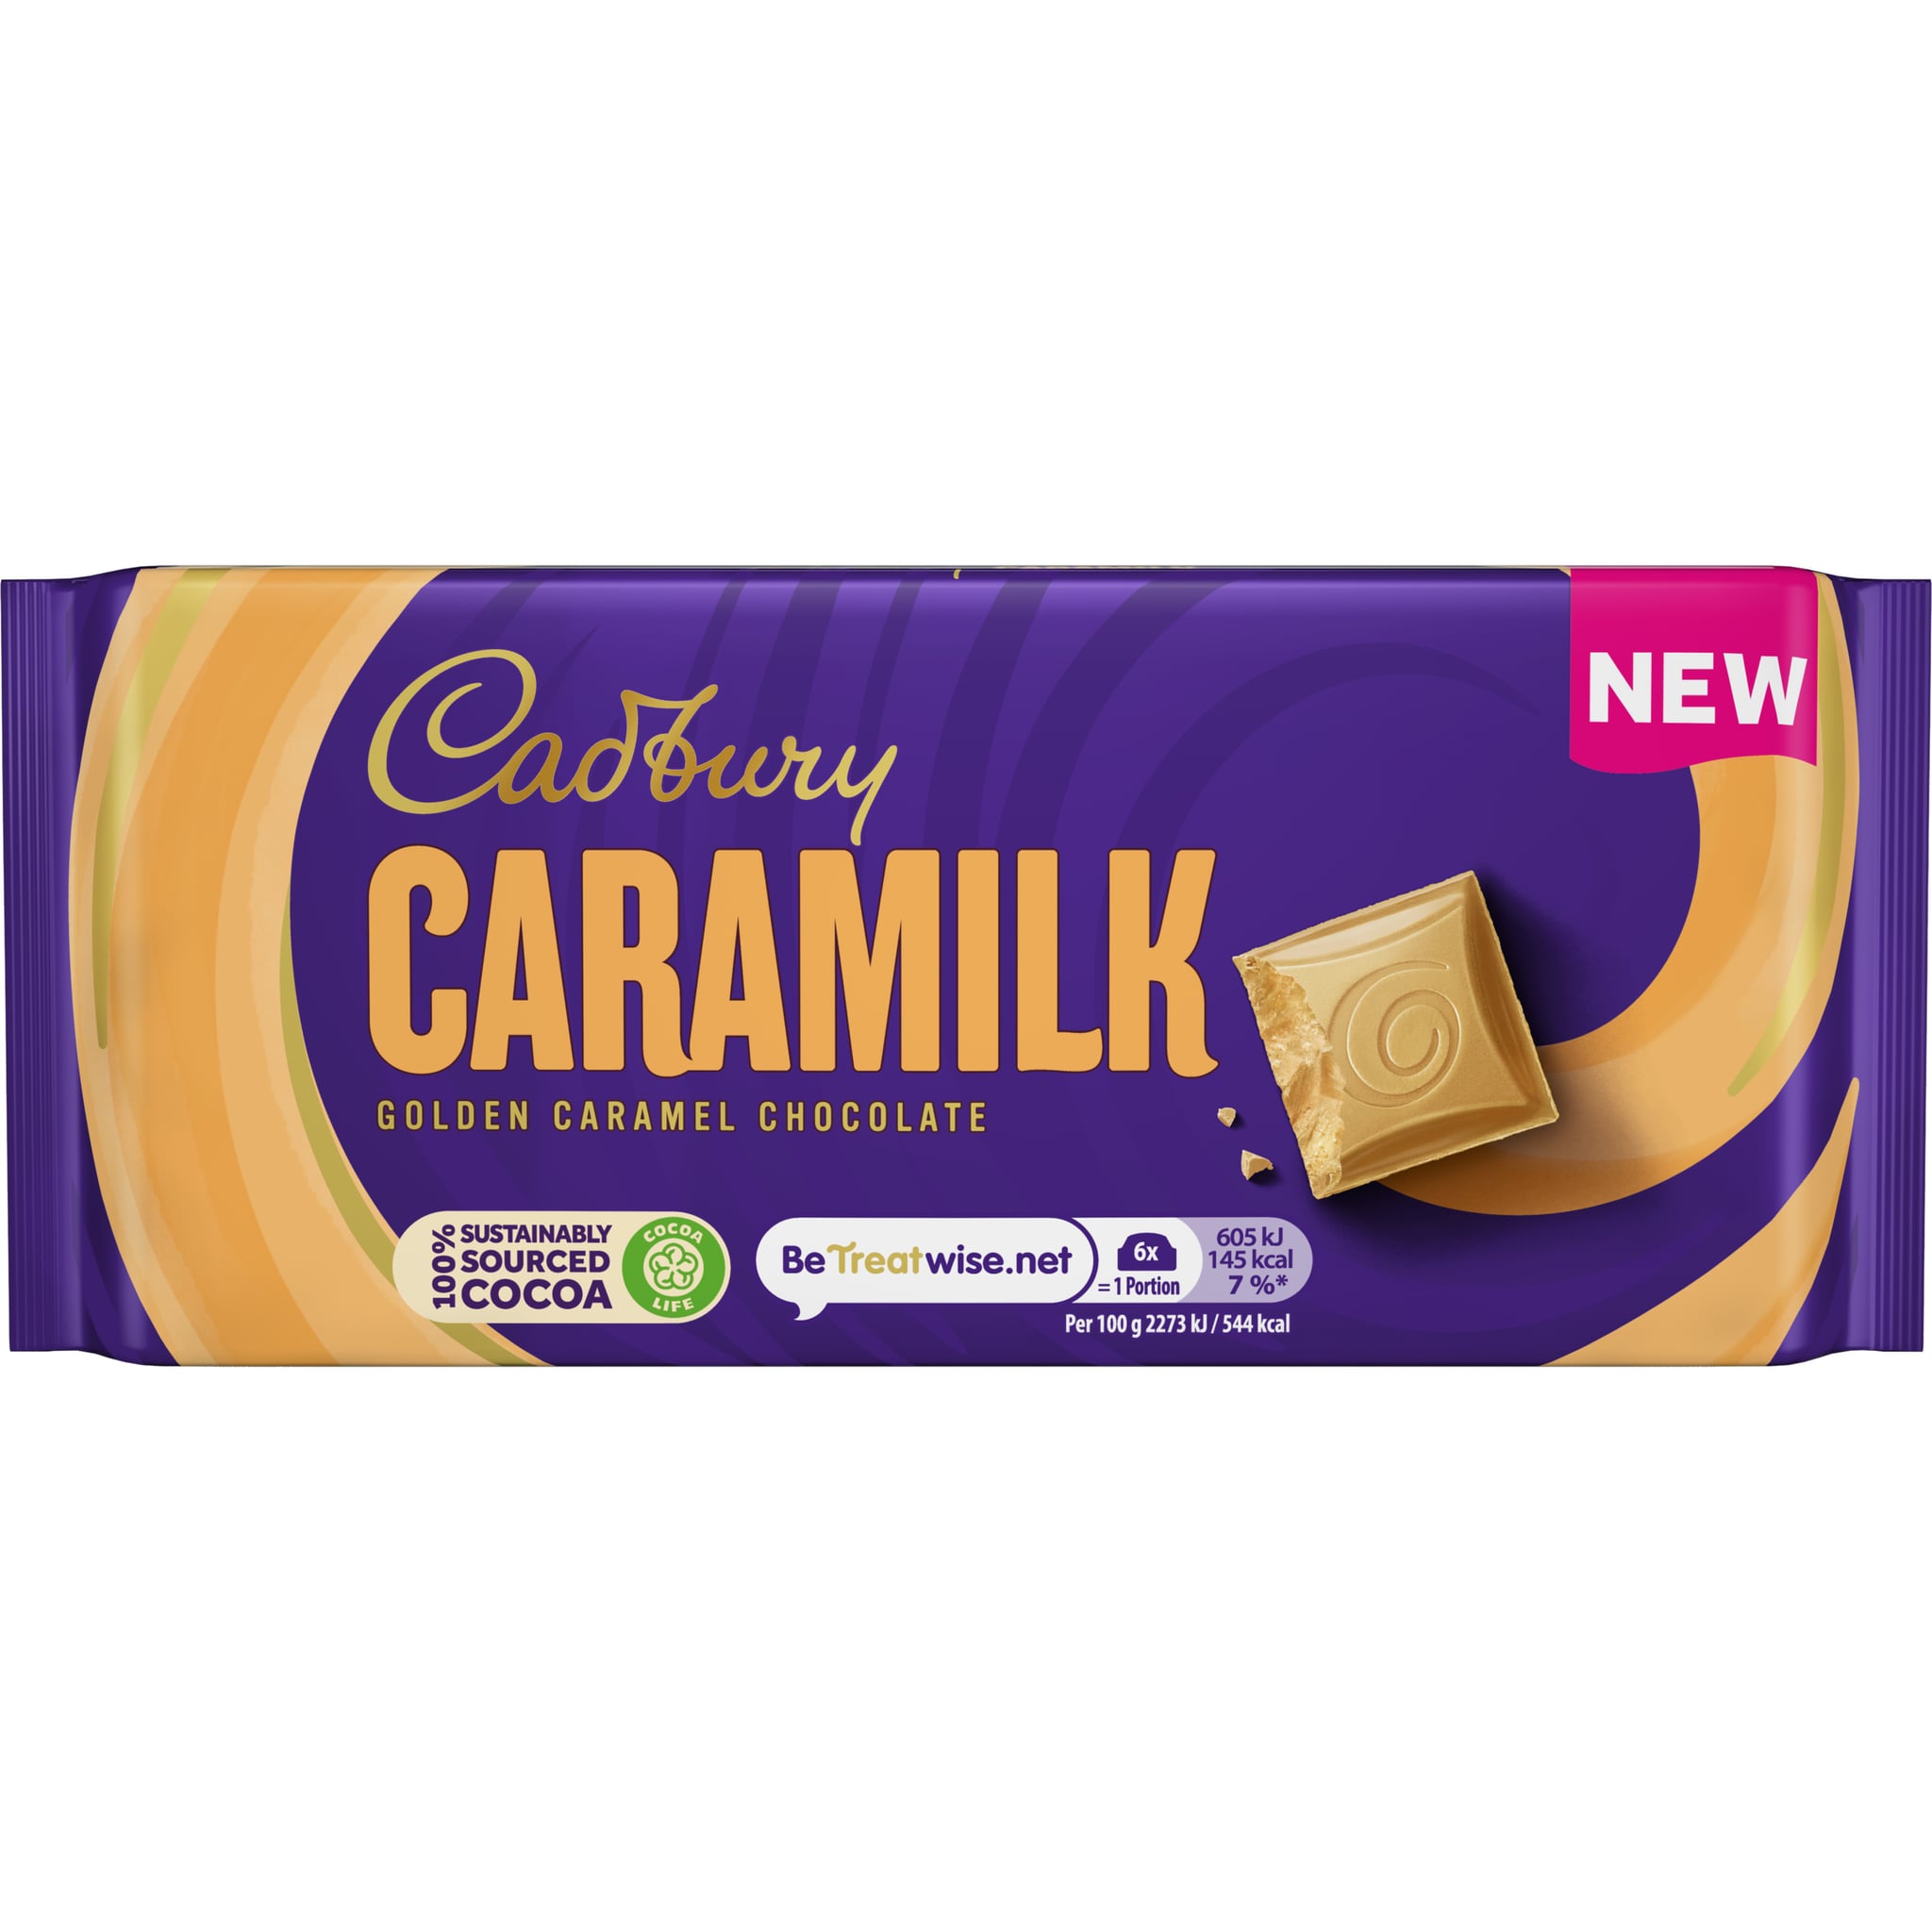 Cadbury Caramilk Bars Are Now Available in the UK | POPSUGAR ...